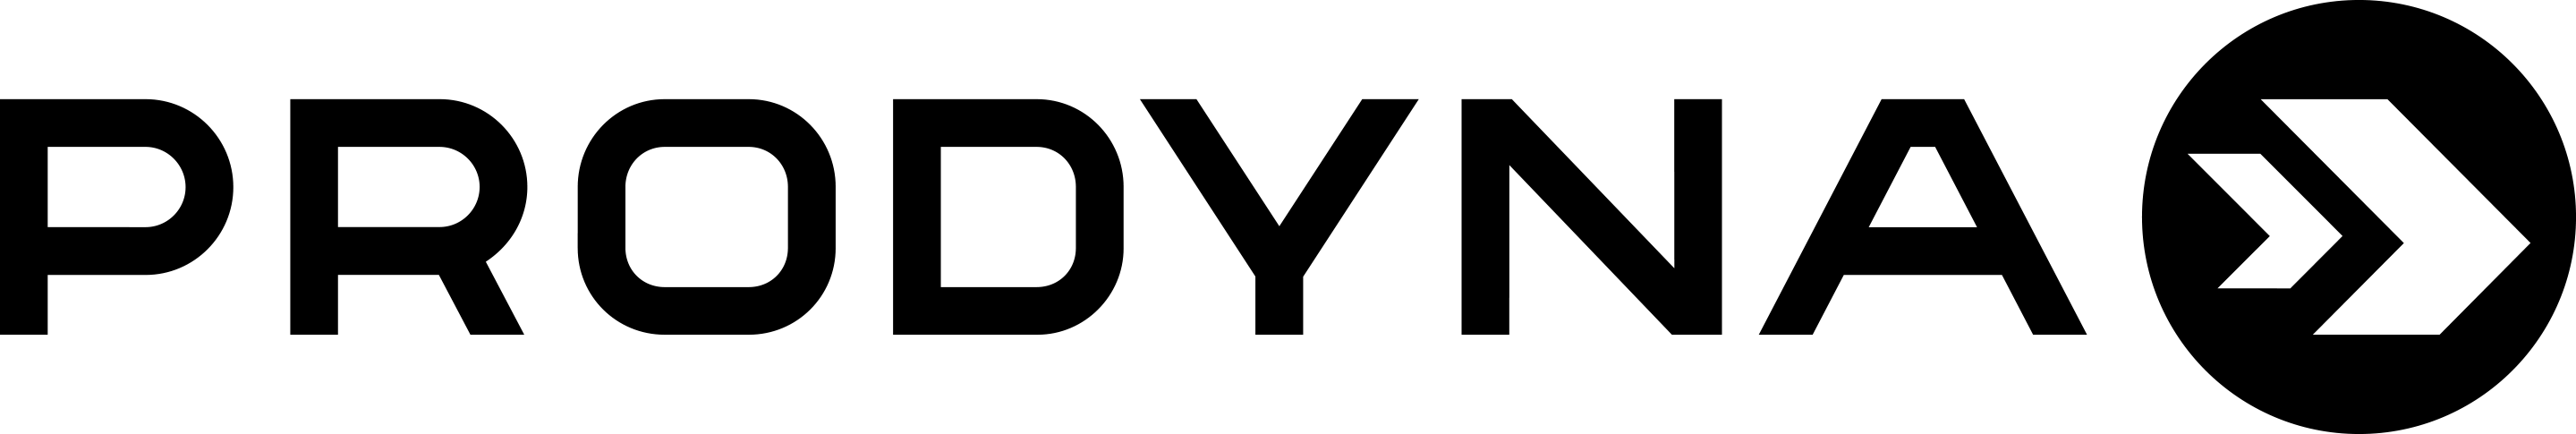 logo-prodyna-2017-12-08